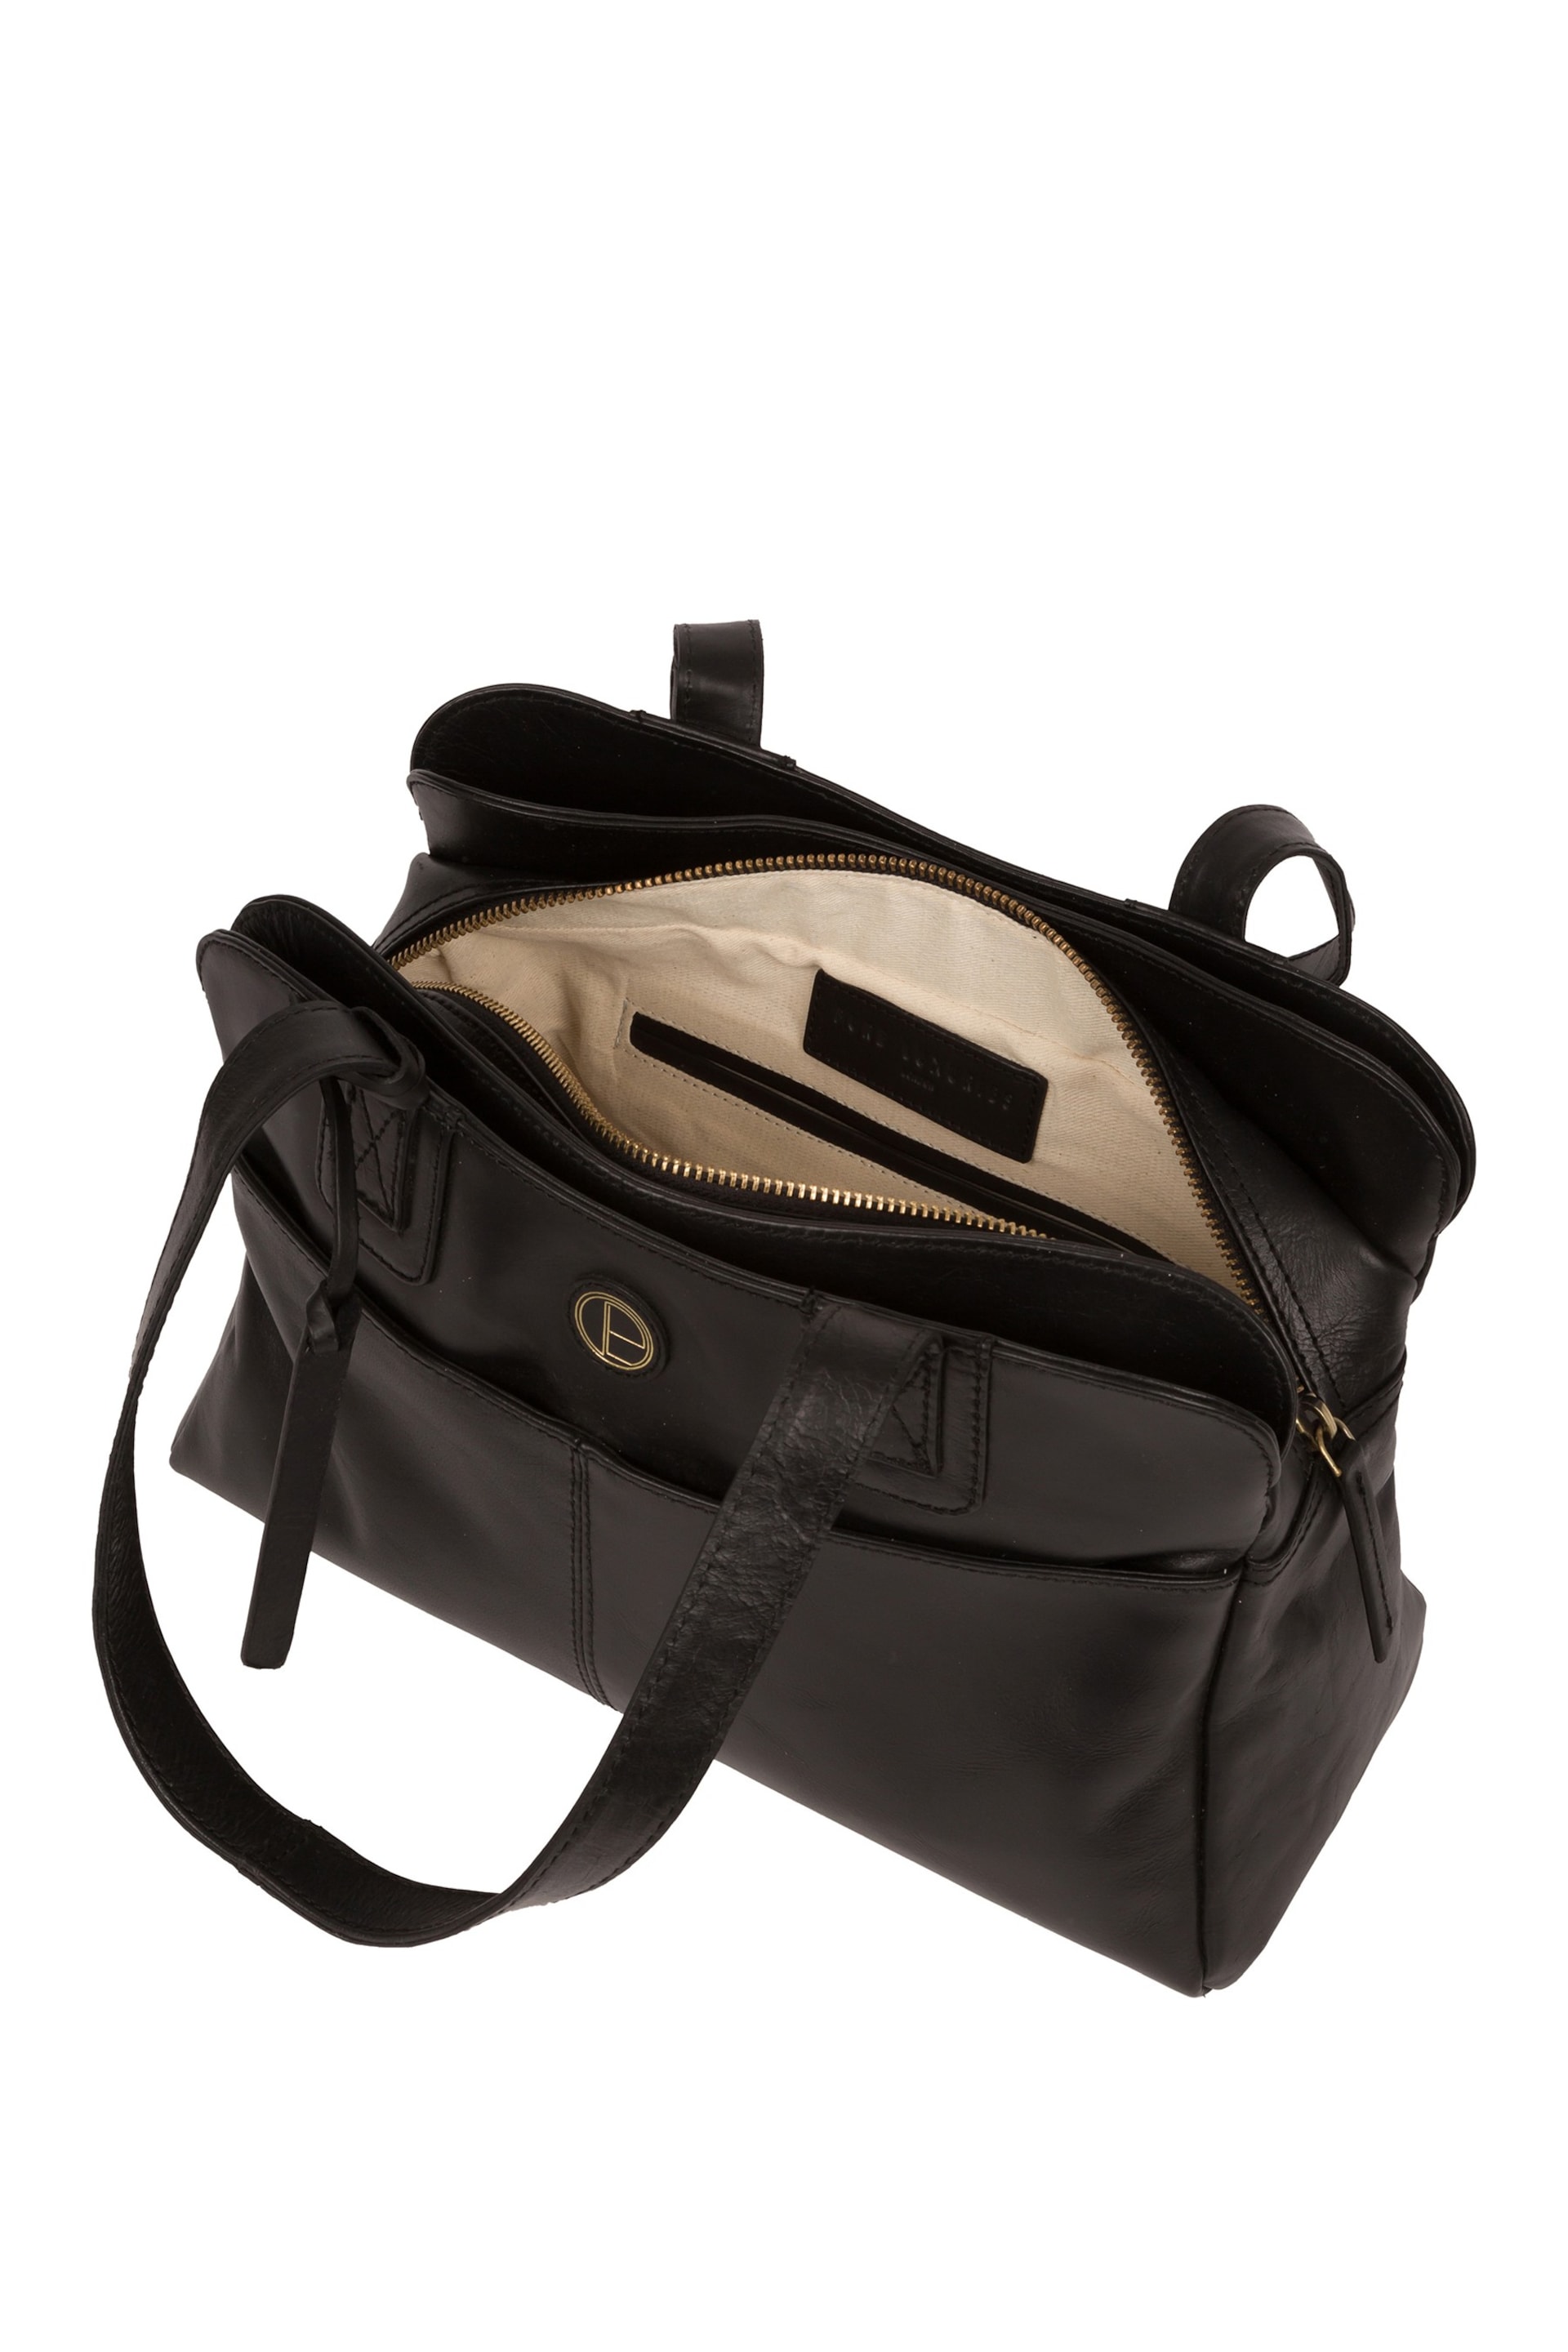 Pure Luxuries London Beacon Leather Handbag - Image 3 of 6